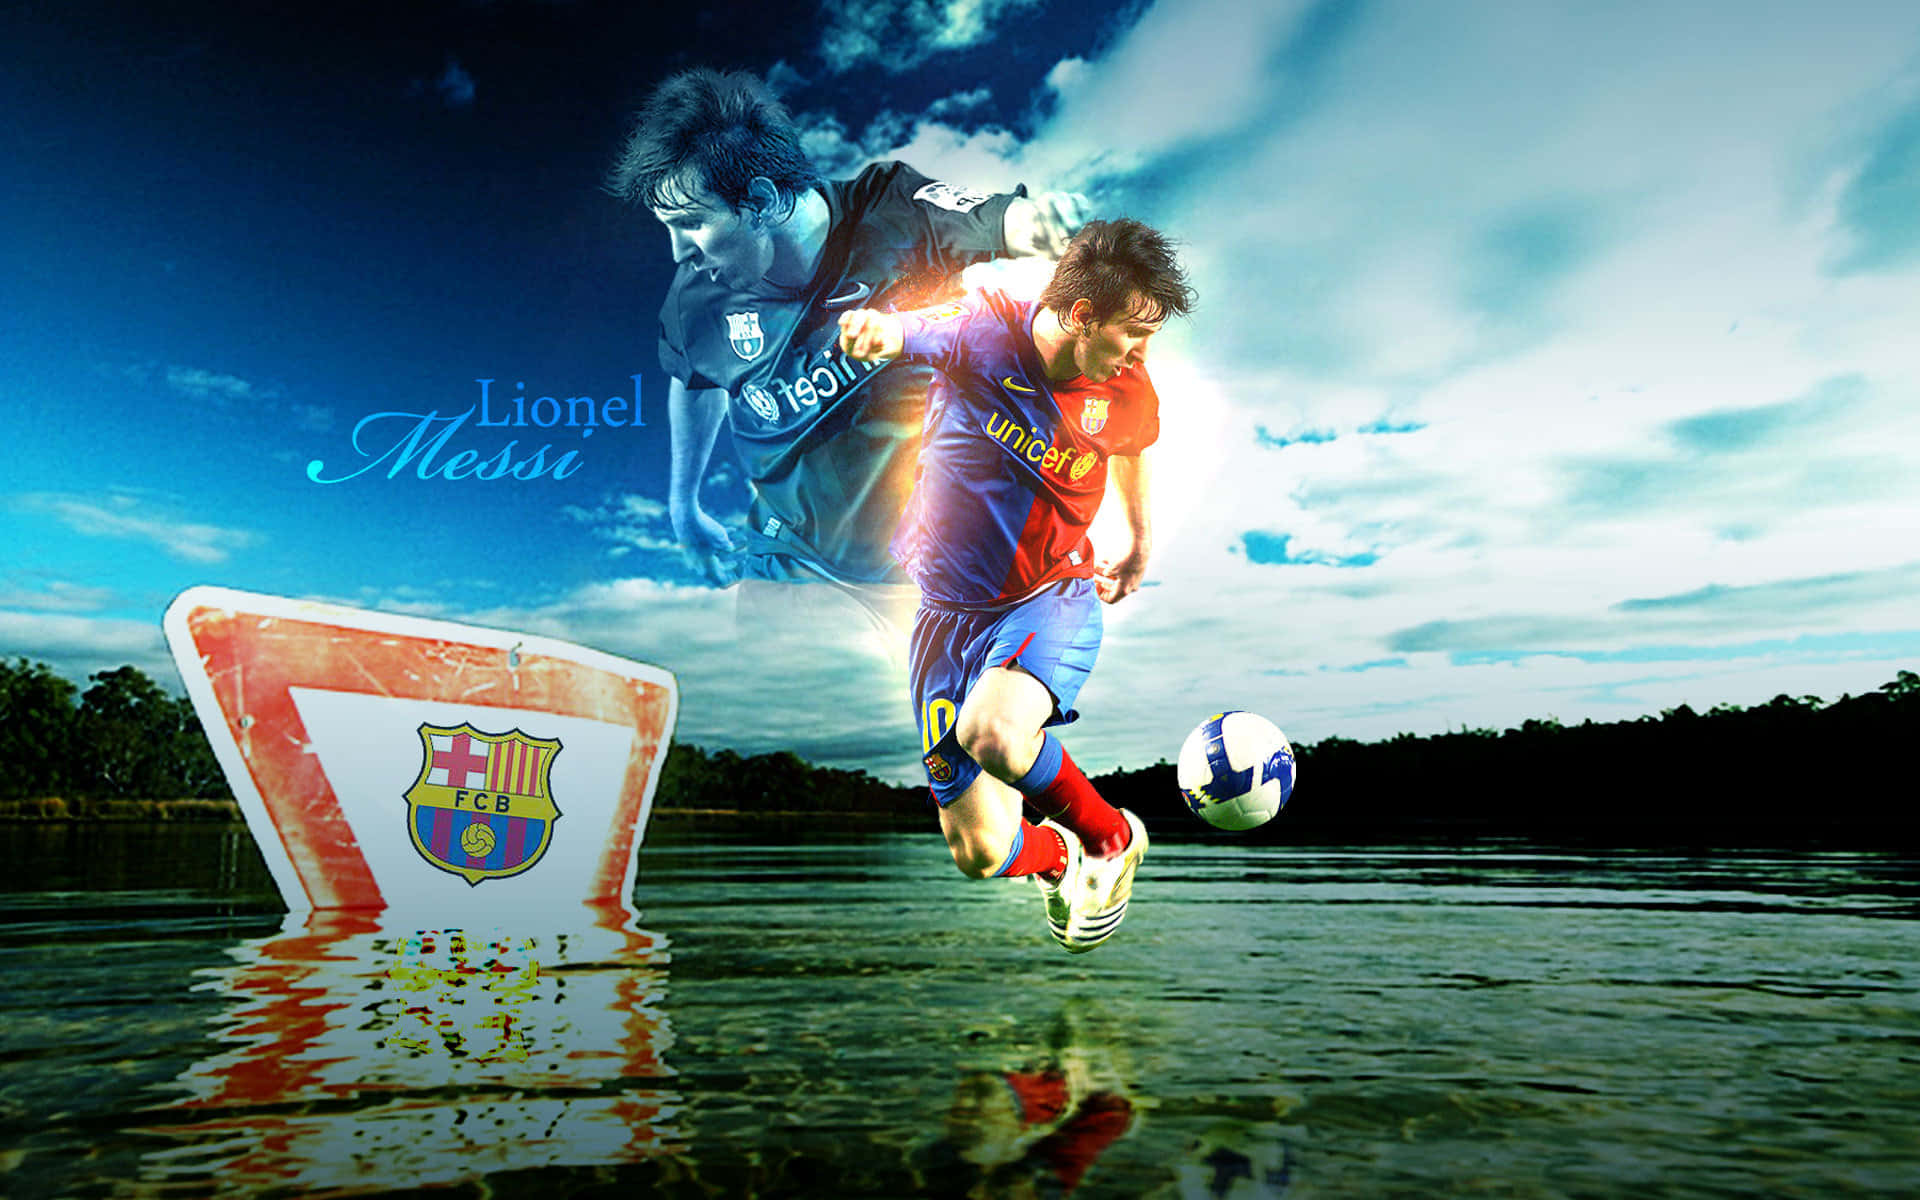 Lionel Messi Soccer Dribbling Artwork Wallpaper